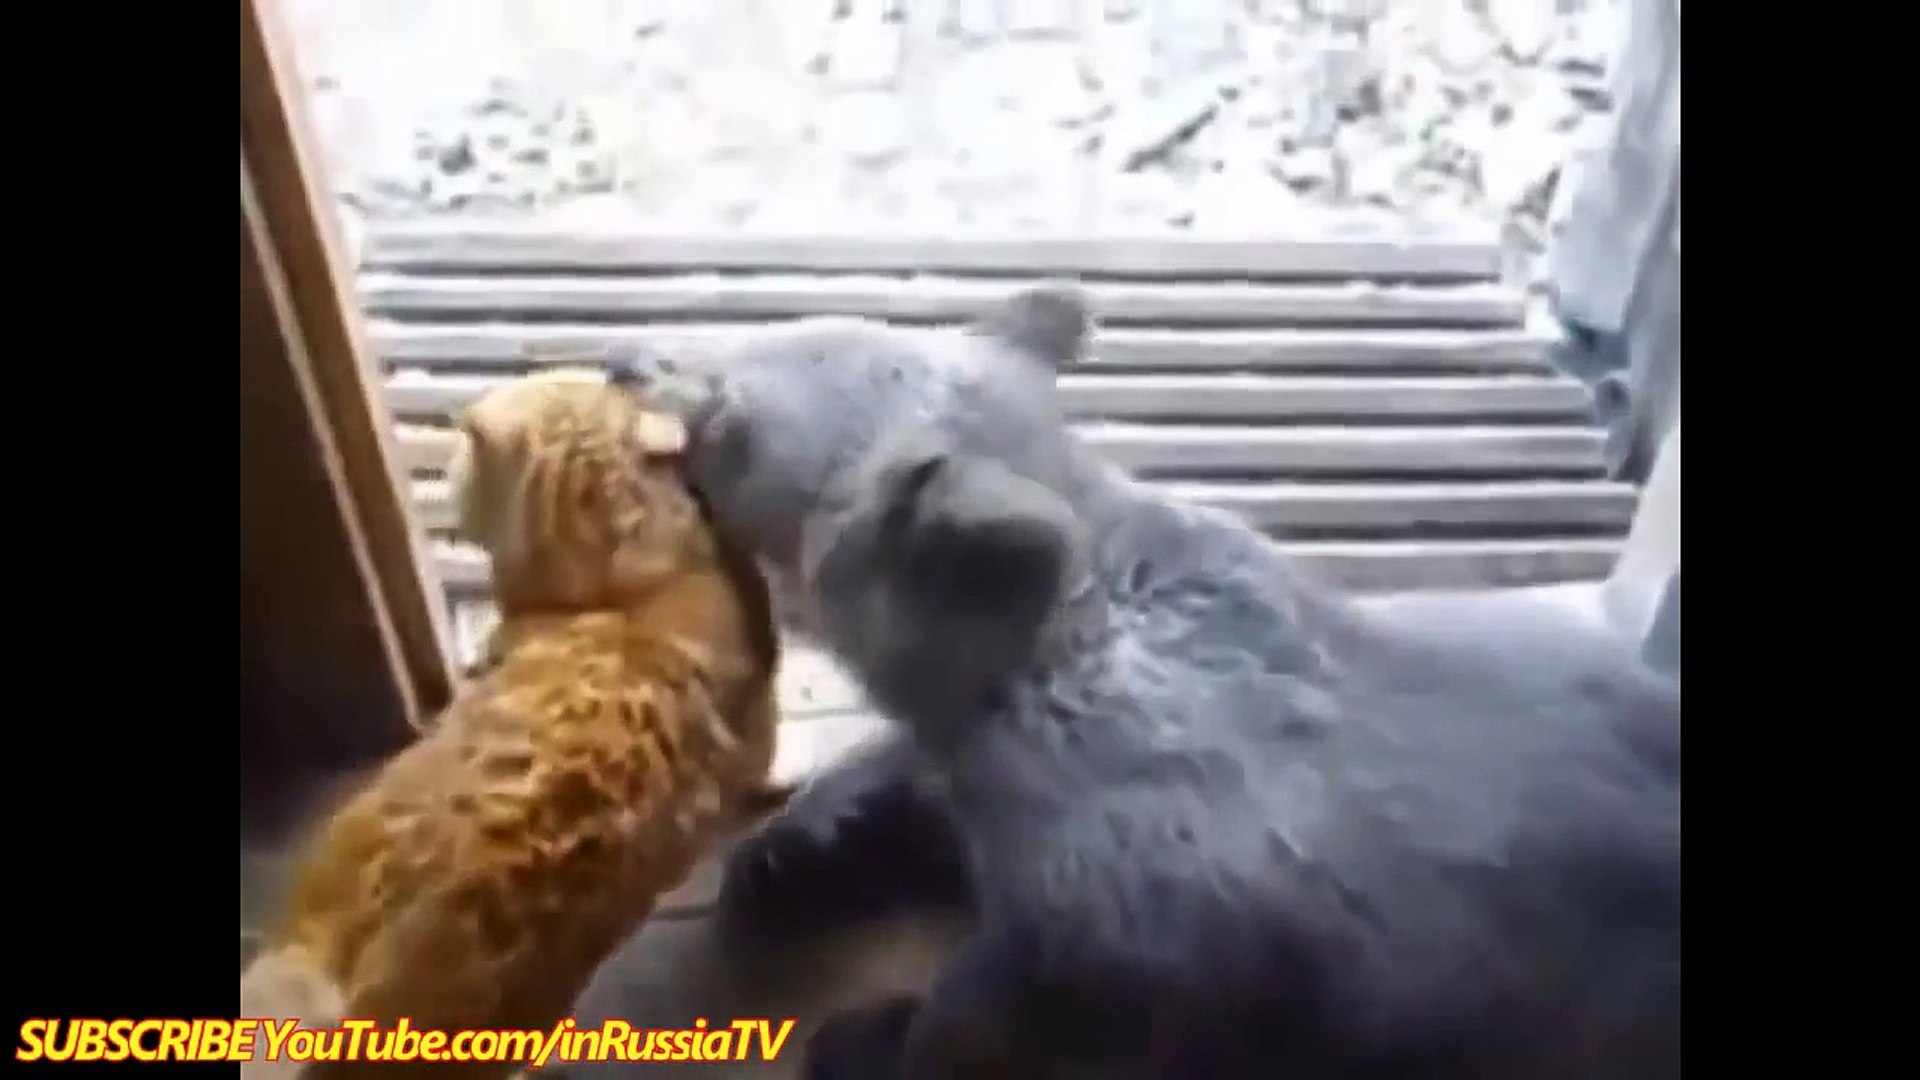 FUNNY VIDEOS   Funny Cats & Bear   Funny Cat Videos   Funny Animals   Cats Funny Videos 2014